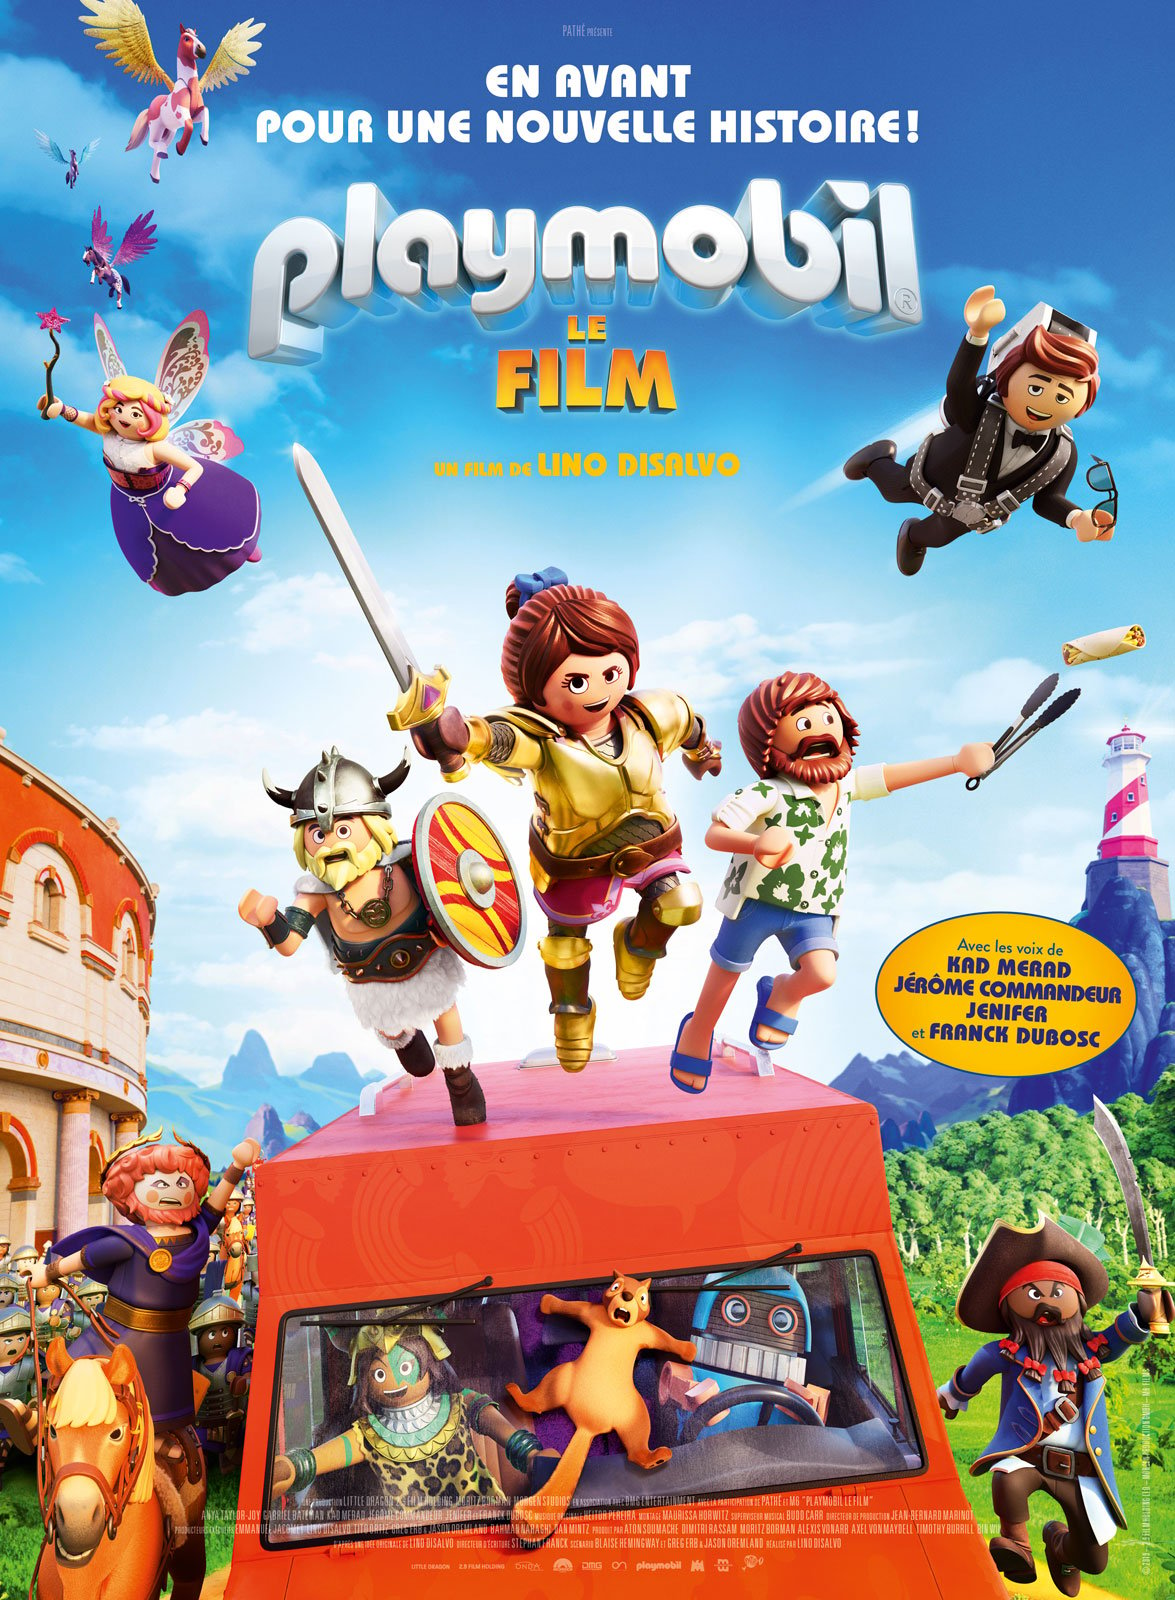 Playmobil, le Film - film 2019 - AlloCiné